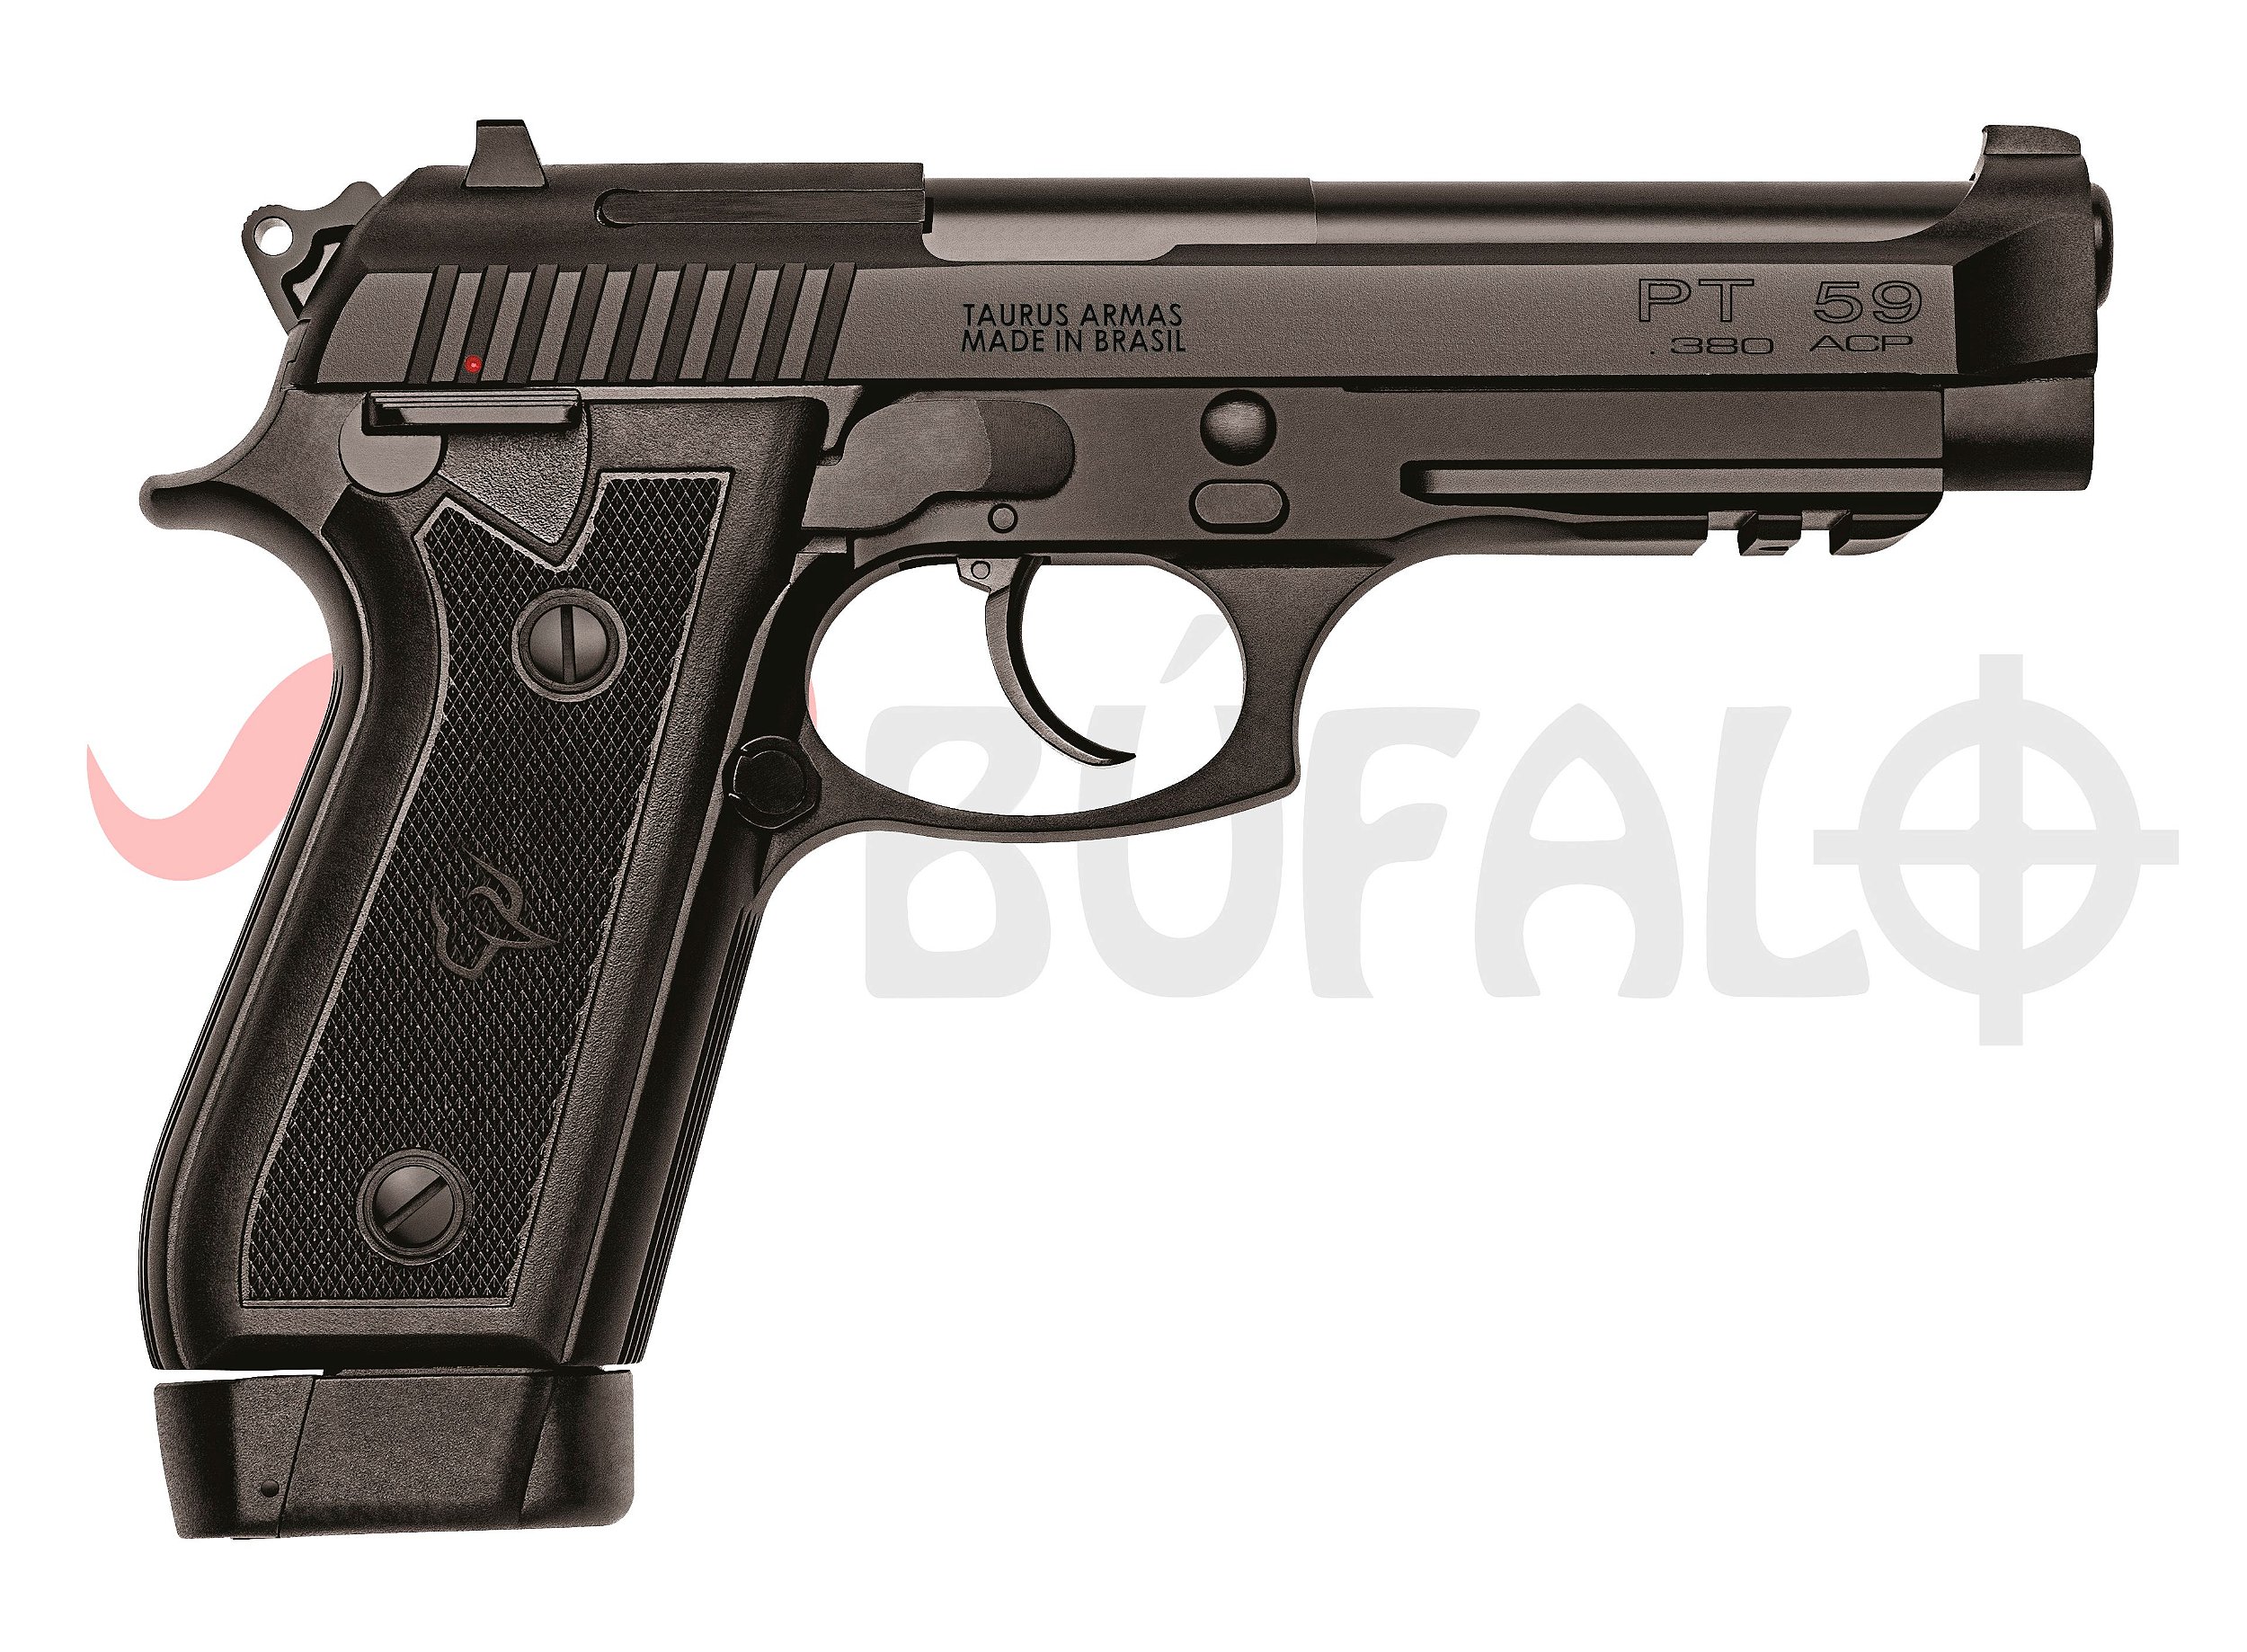 Pistola Taurus 59S Calibre .380 ACP Inox Fosco